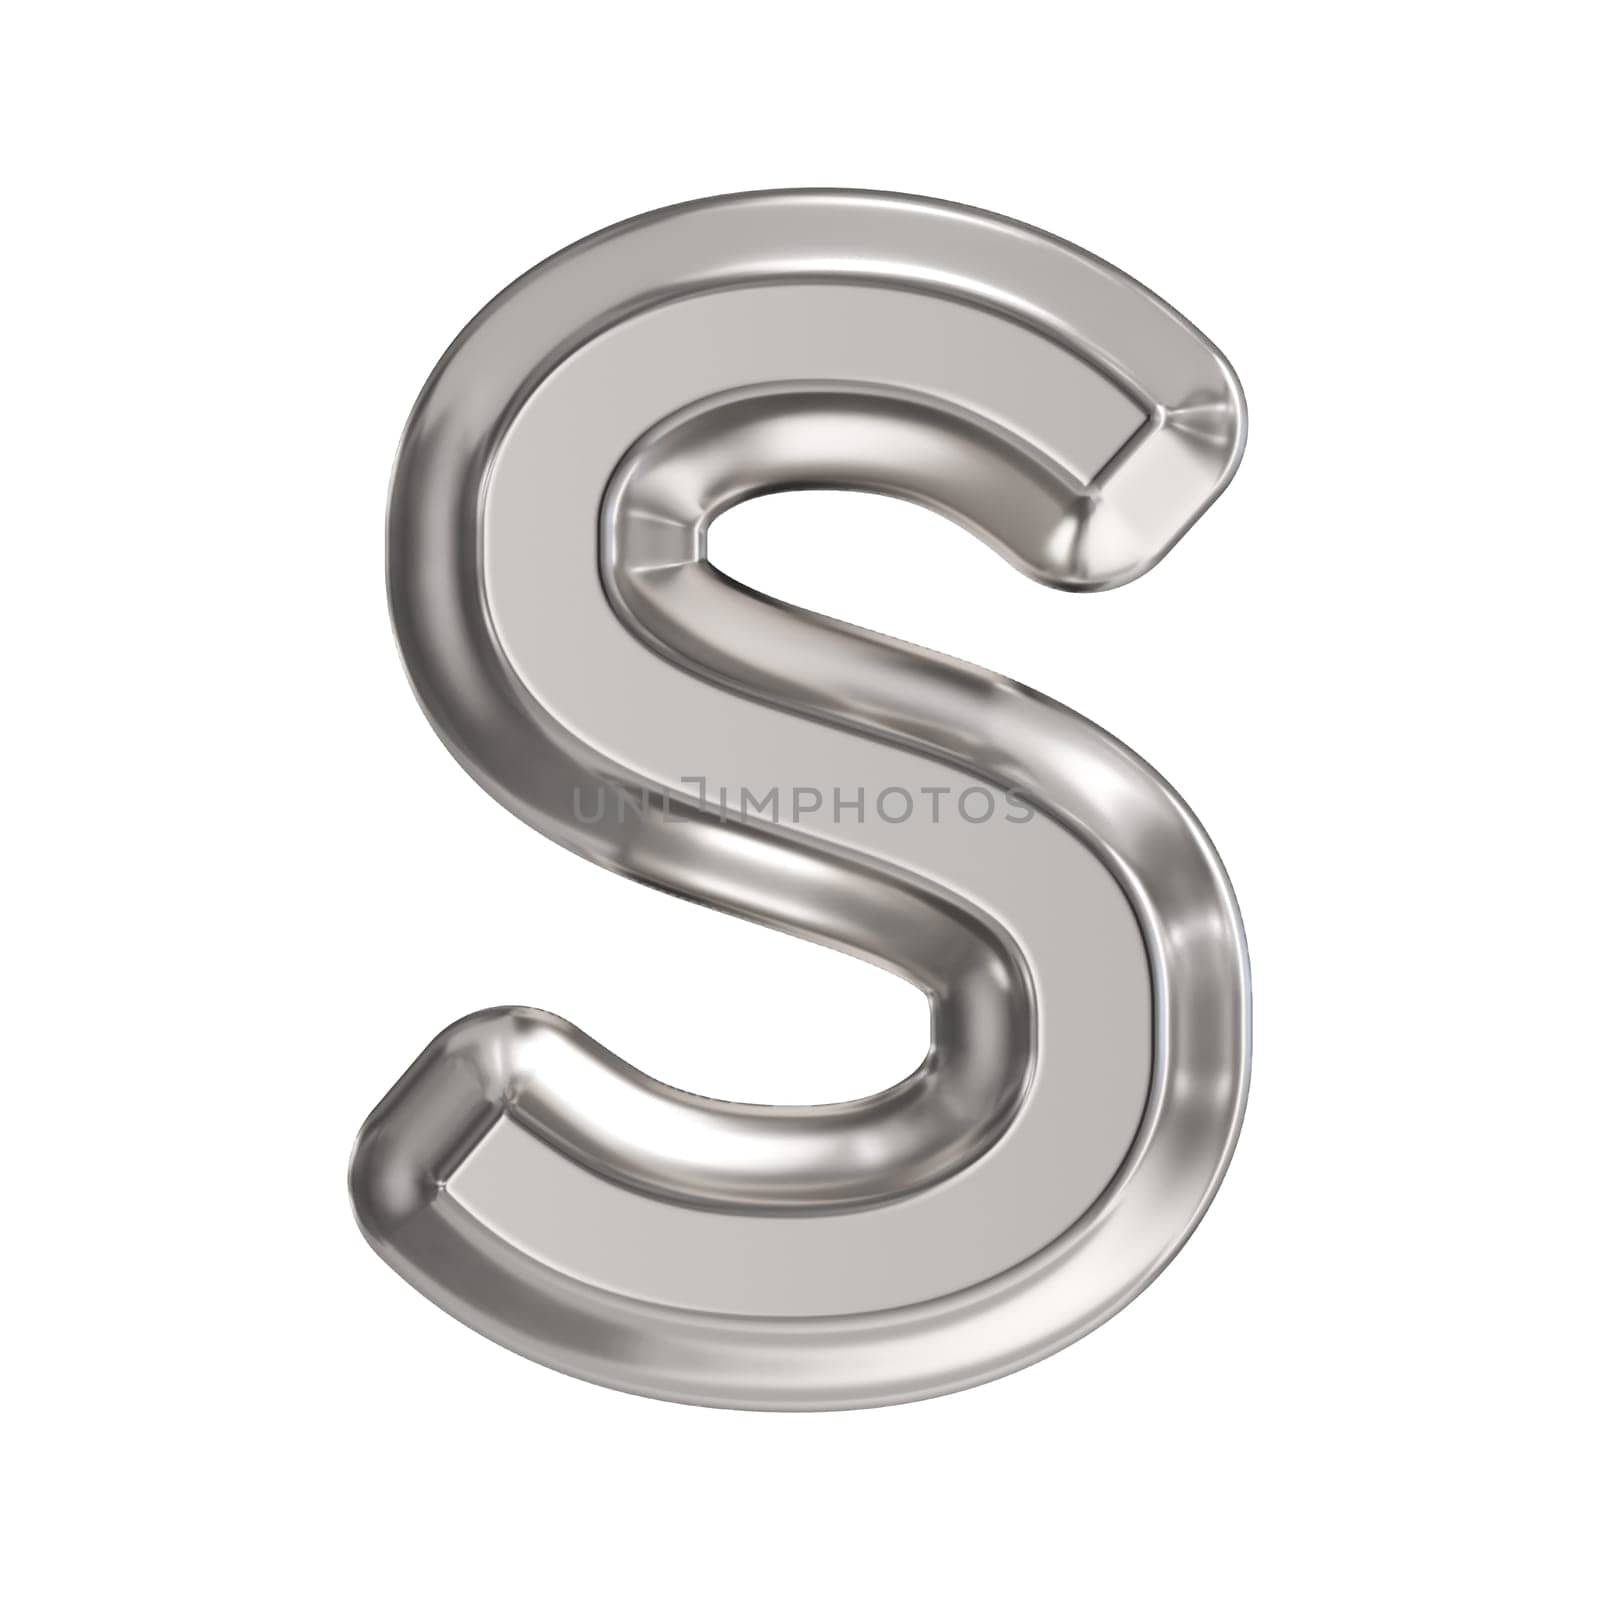 Steel font Letter S 3D rendering illustration isolated on white background